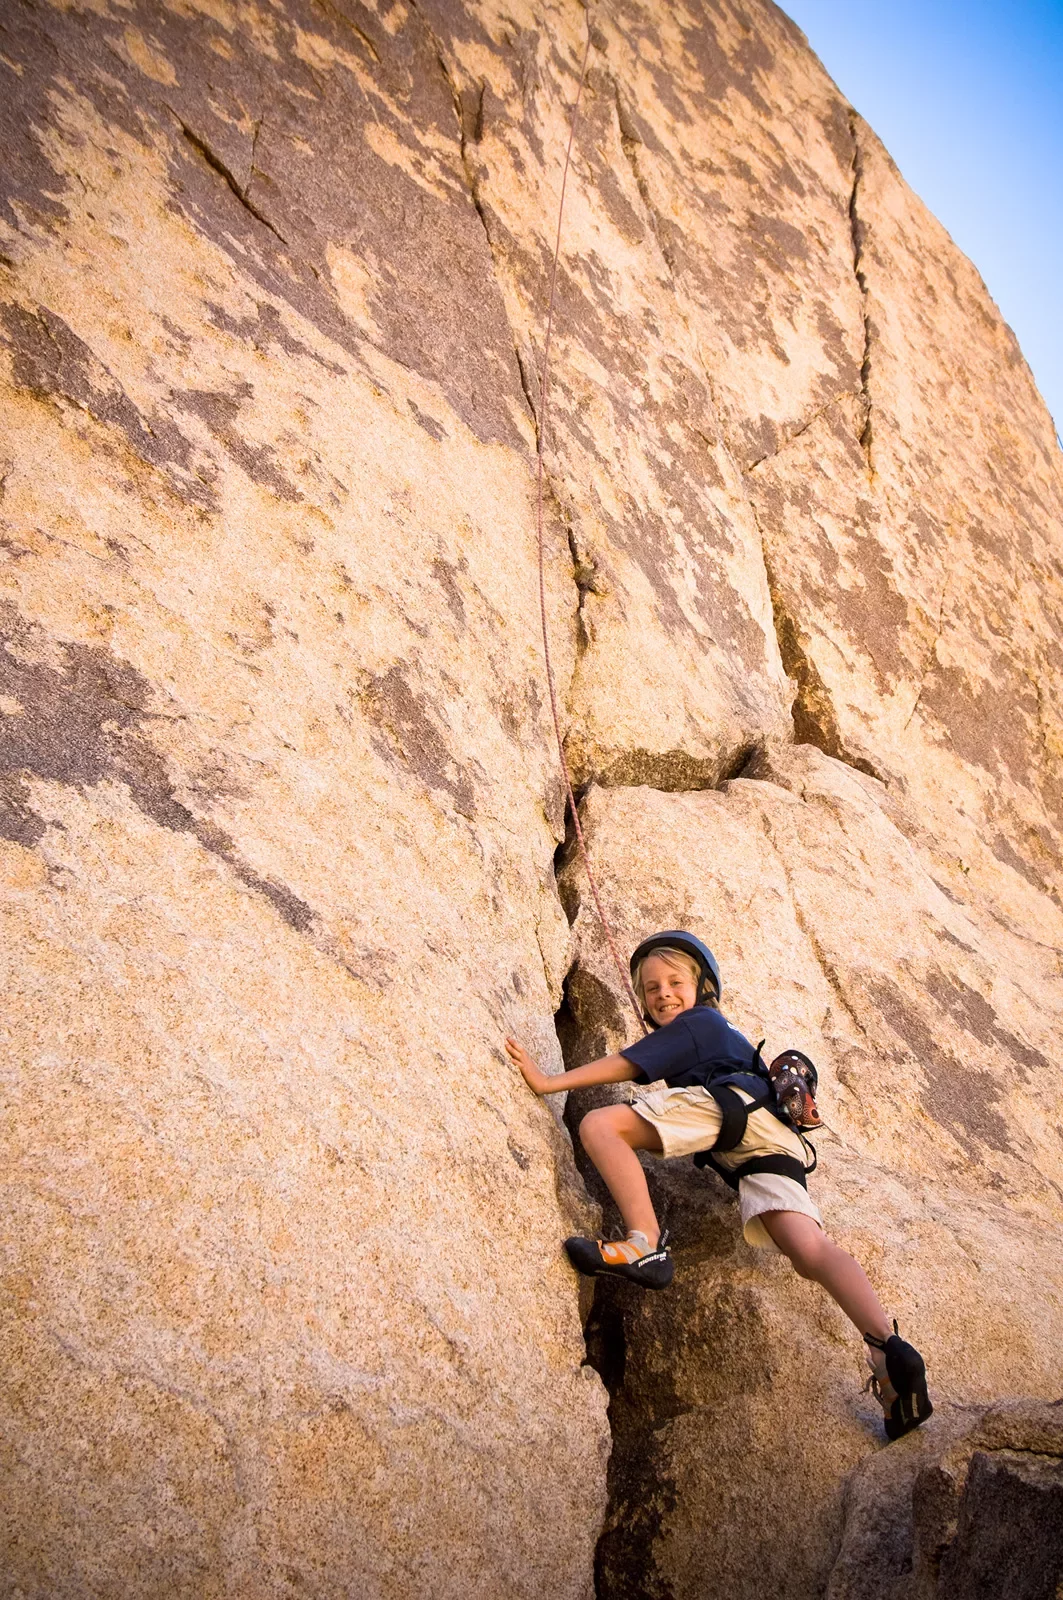 Child rock climbing on sandy cliffside.